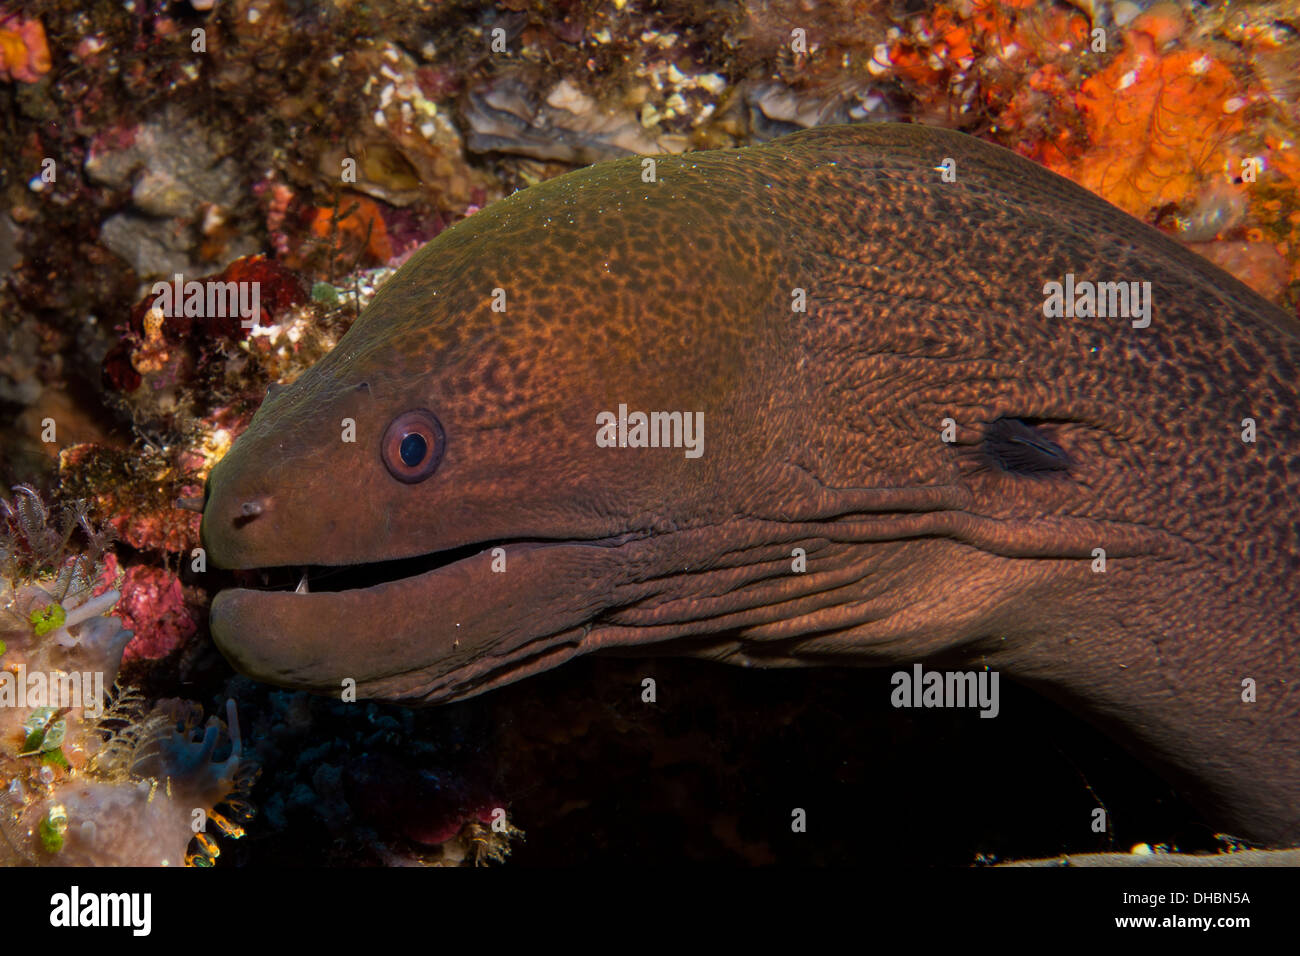 underwater, Indonesia, Komodo, marine life, sea life, moray eel, scuba, diving, ocean, sea, Stock Photo